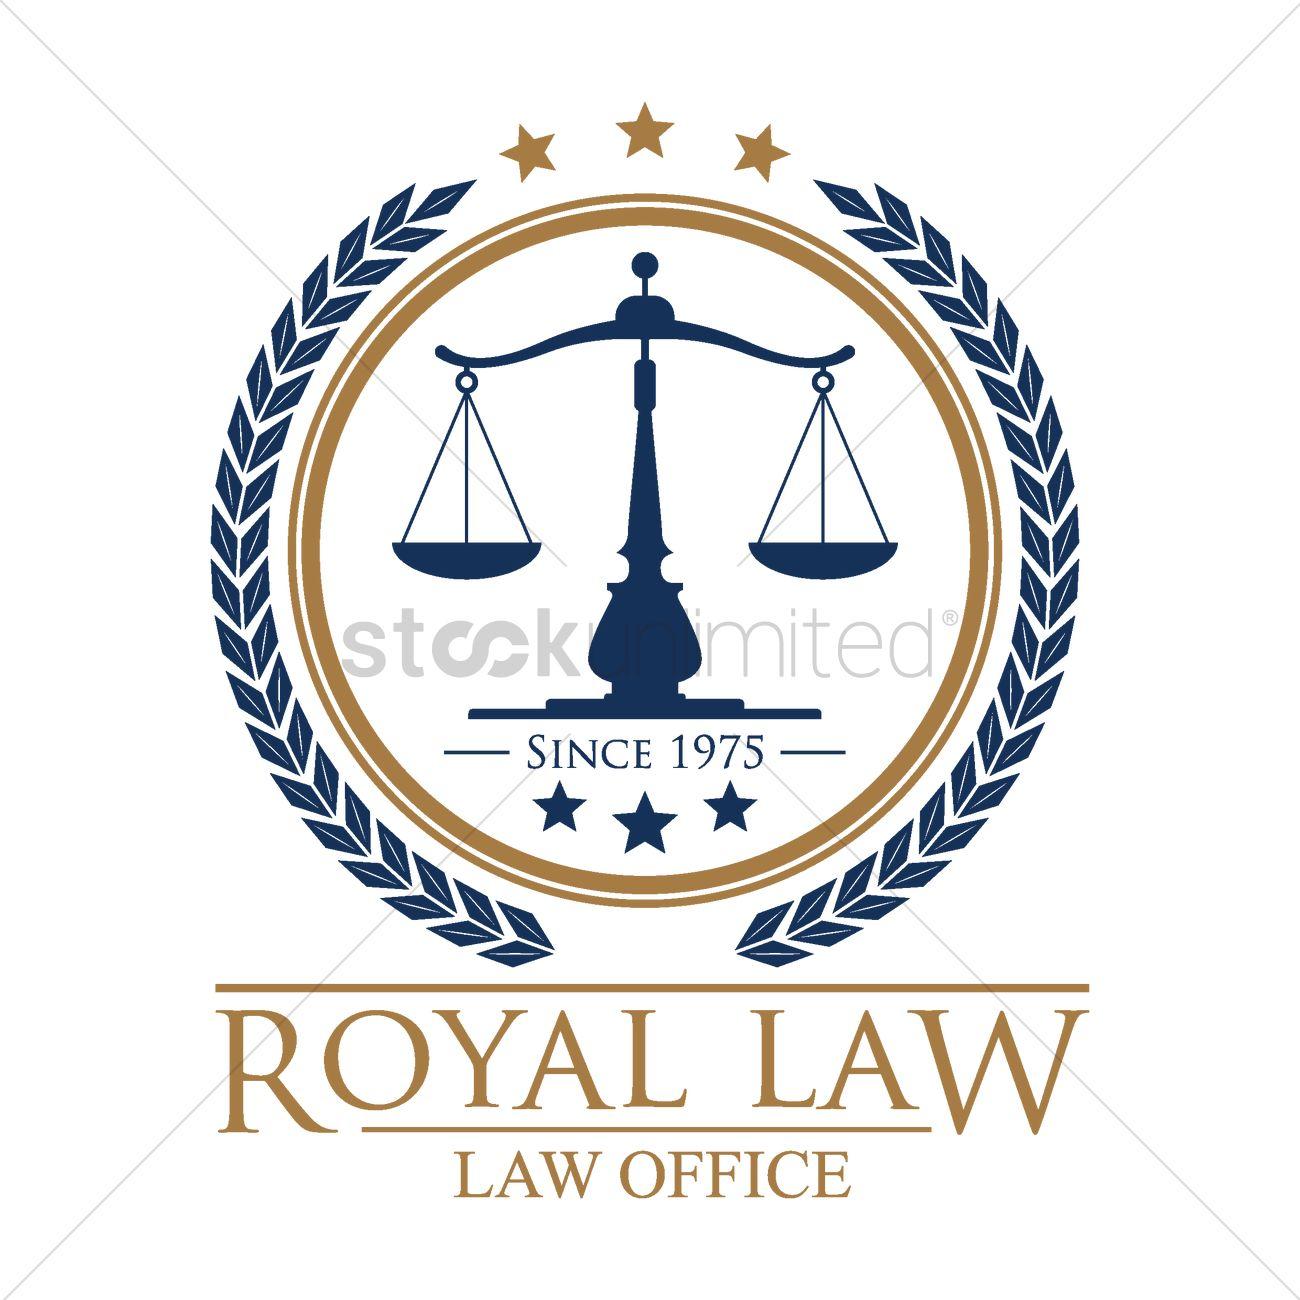 Law Logo - Royal law logo element Vector Image - 1982928 | StockUnlimited